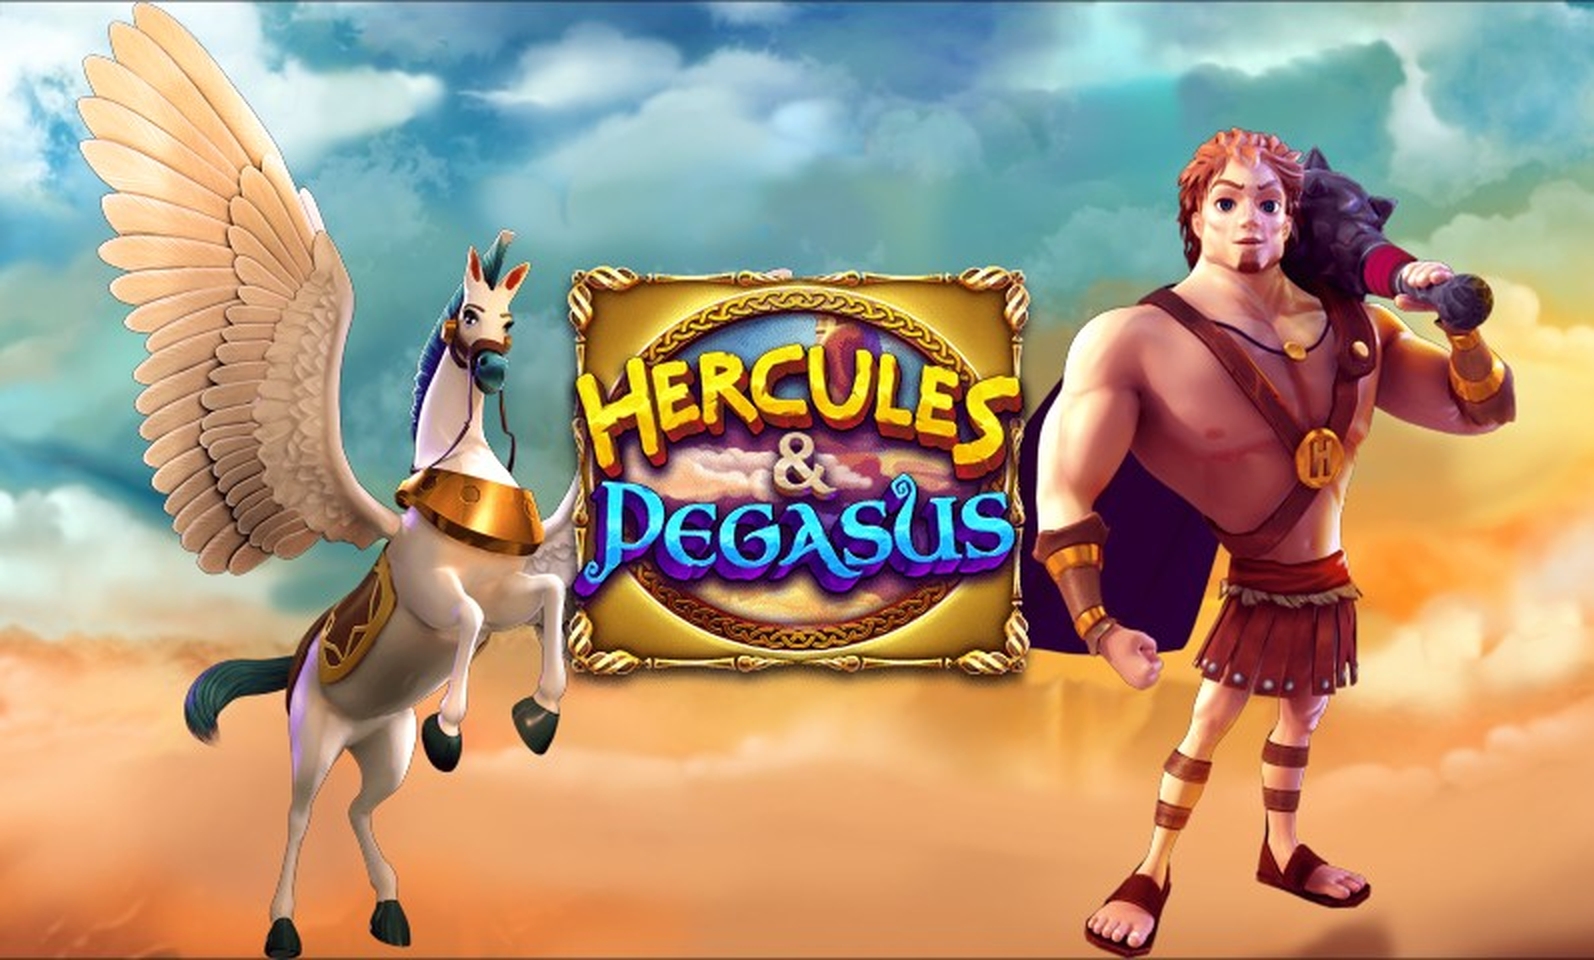 The Hercules and Pegasus Online Slot Demo Game by Pragmatic Play